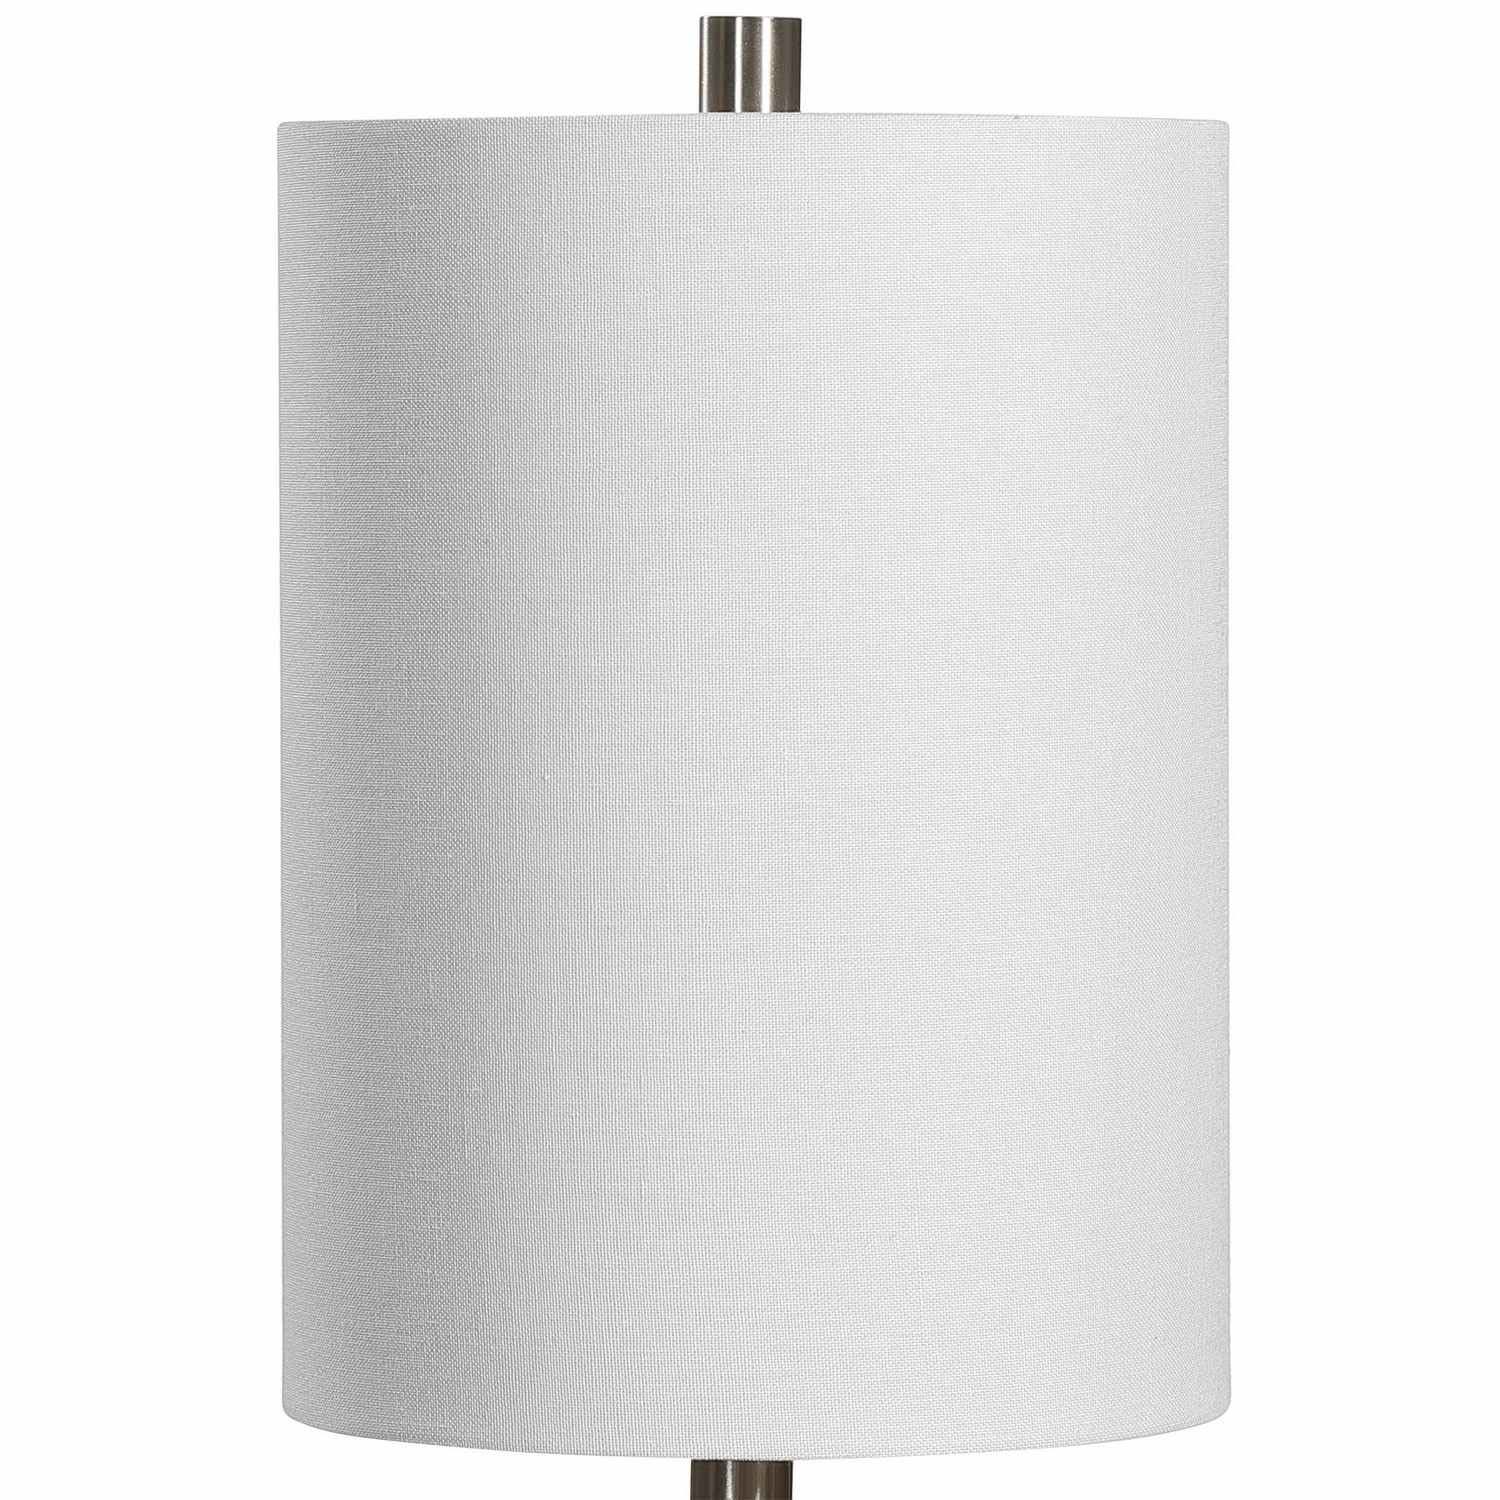 Uttermost W26066-1 Table Lamp - Matte Ceramic